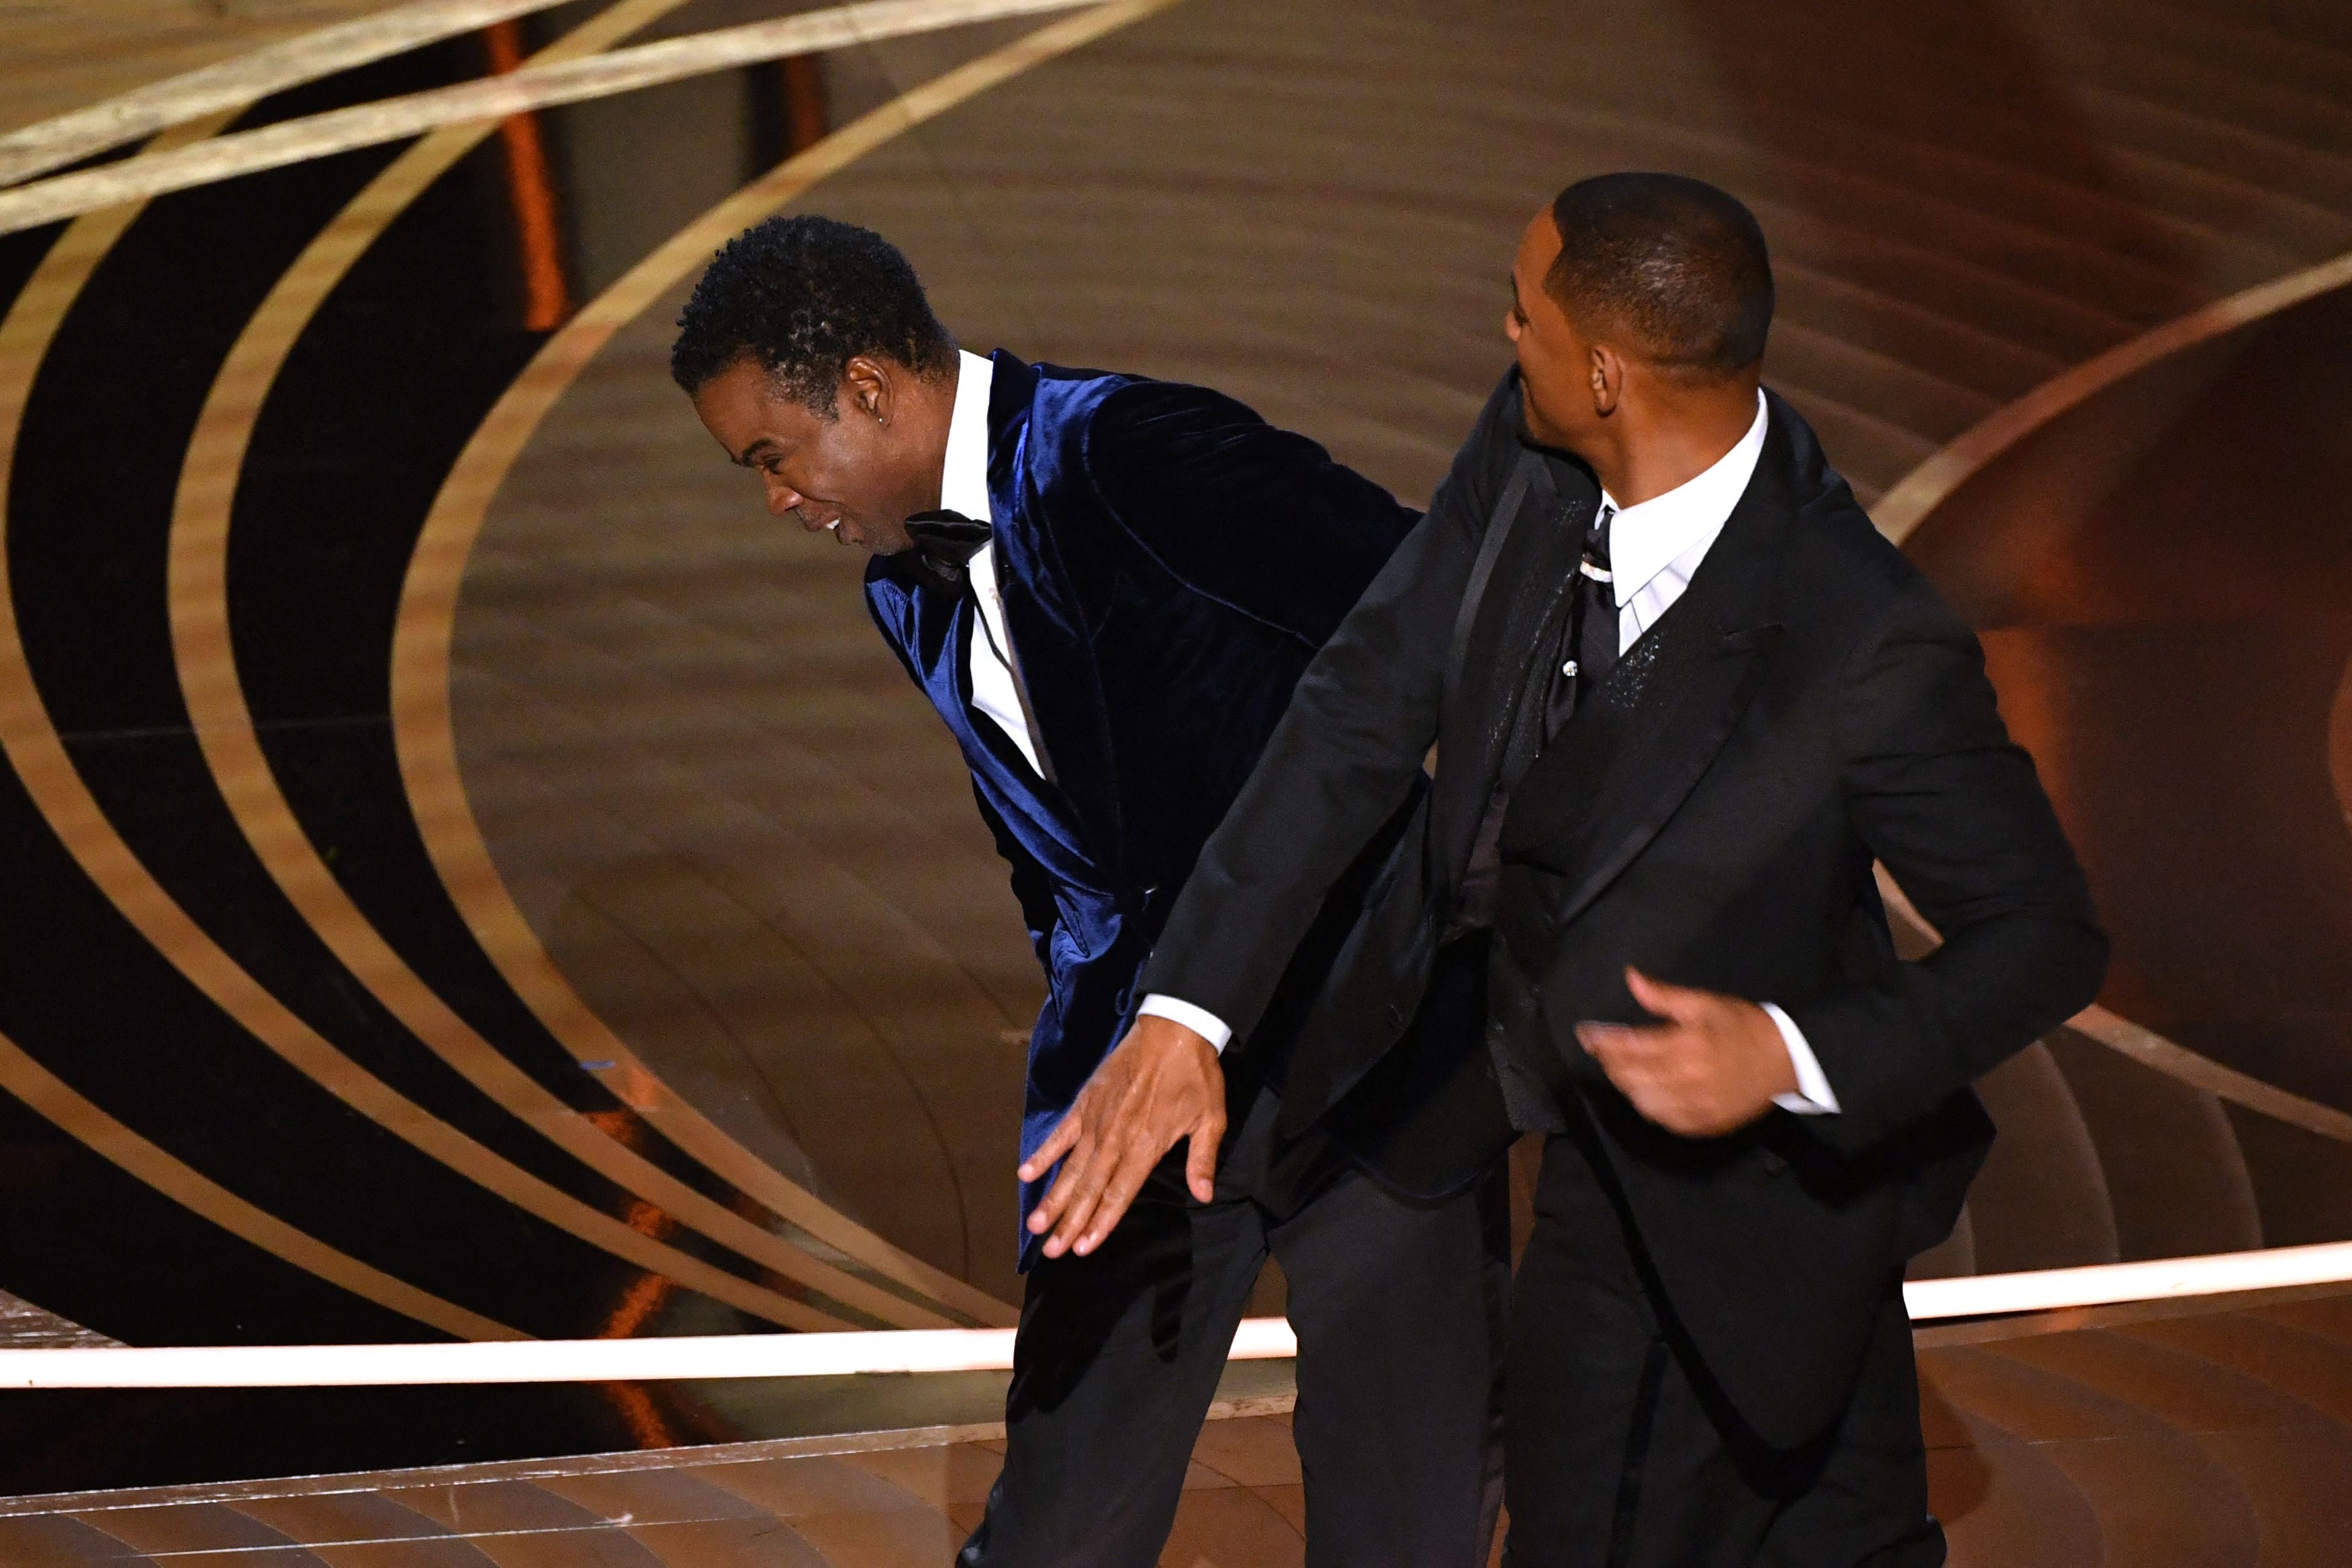 Smith slaps Rock at the 2022 Oscars